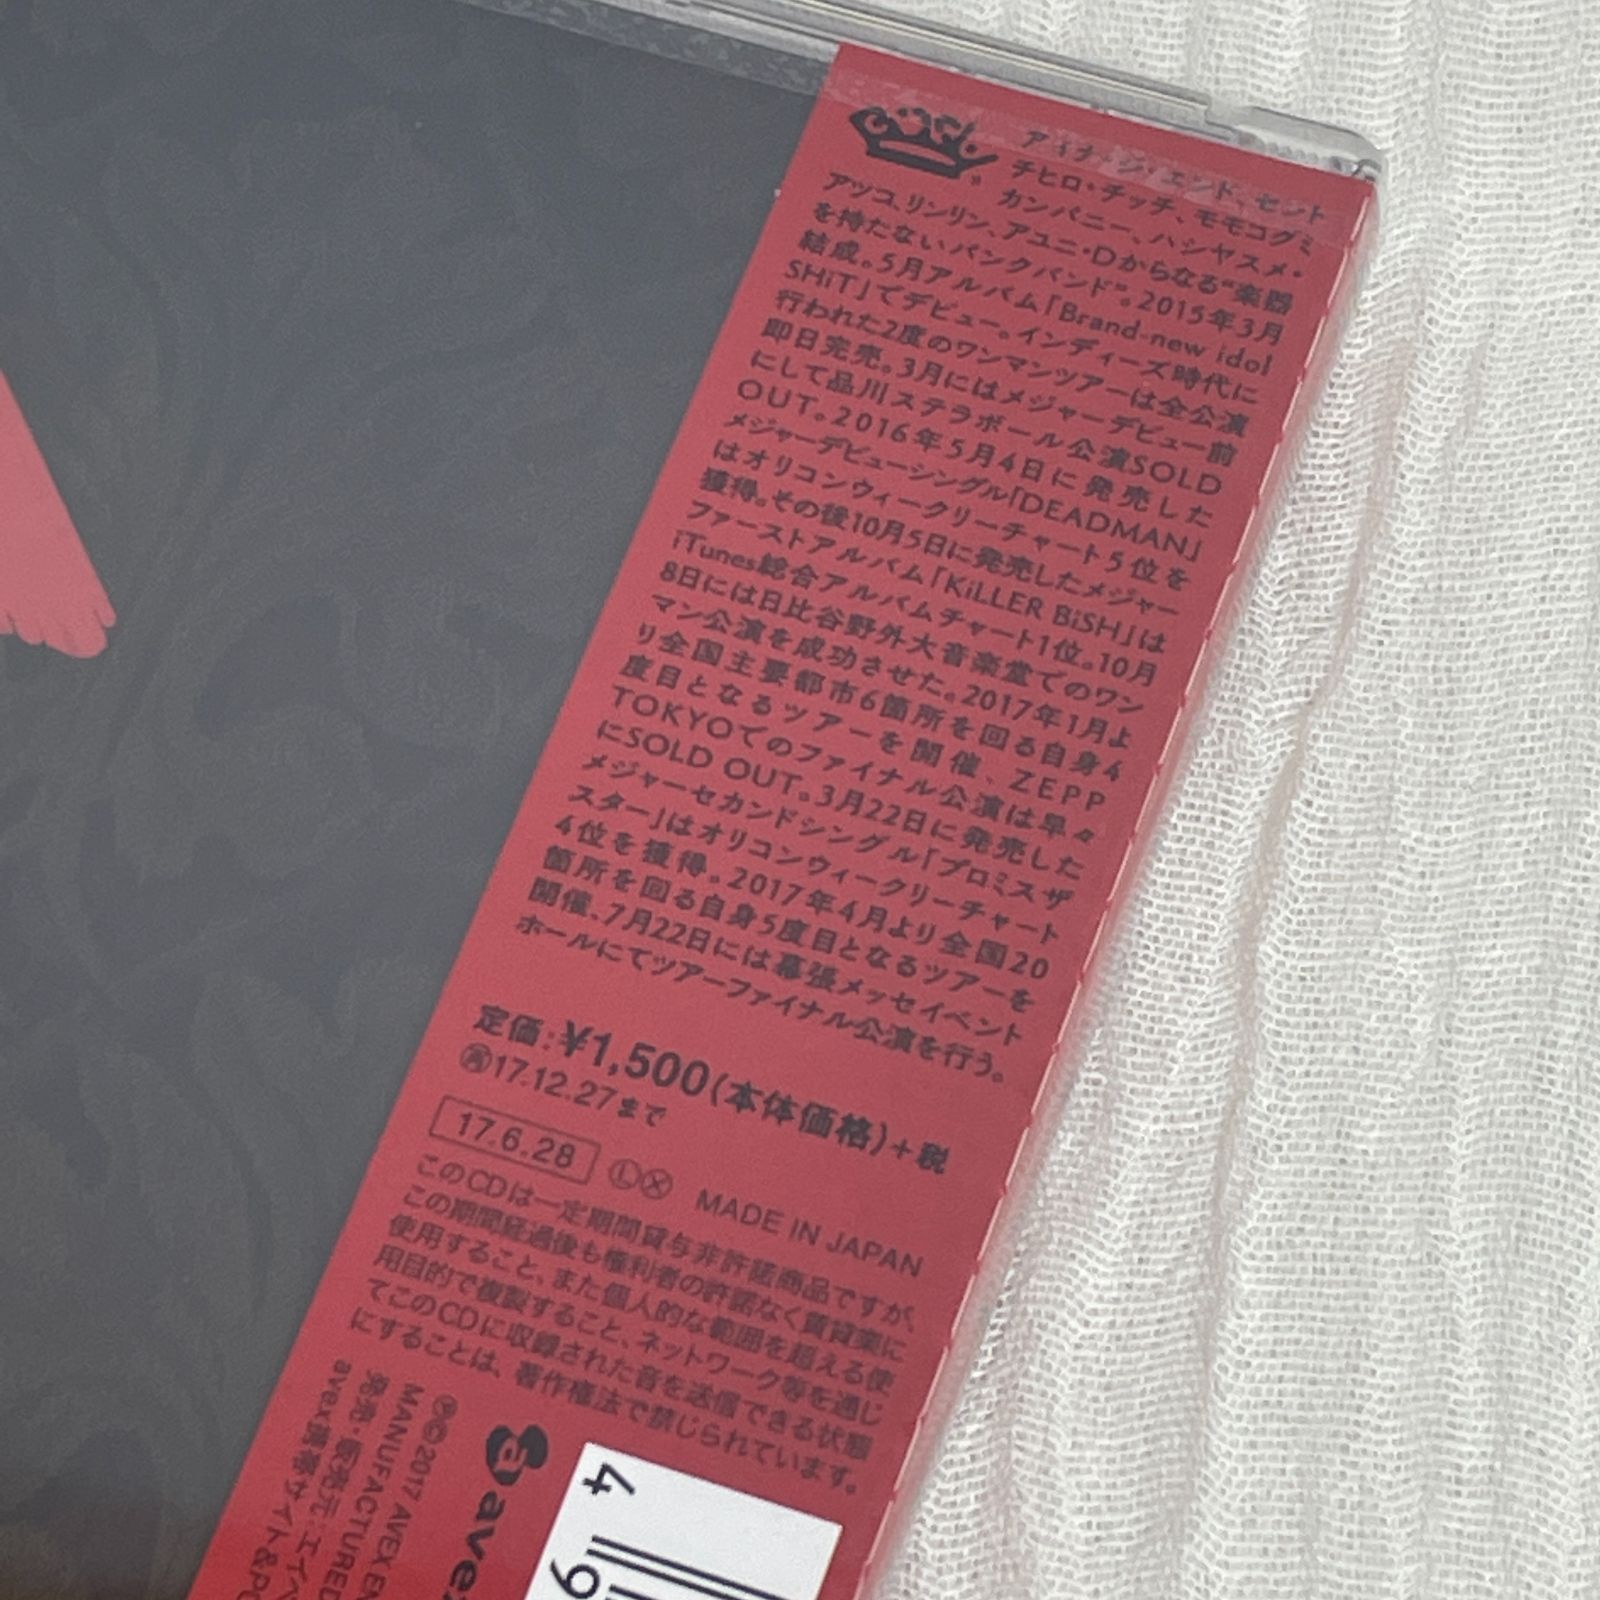 BiSH｜GiANT KiLLERS（通常盤）｜未開封・未使用CD - メルカリ